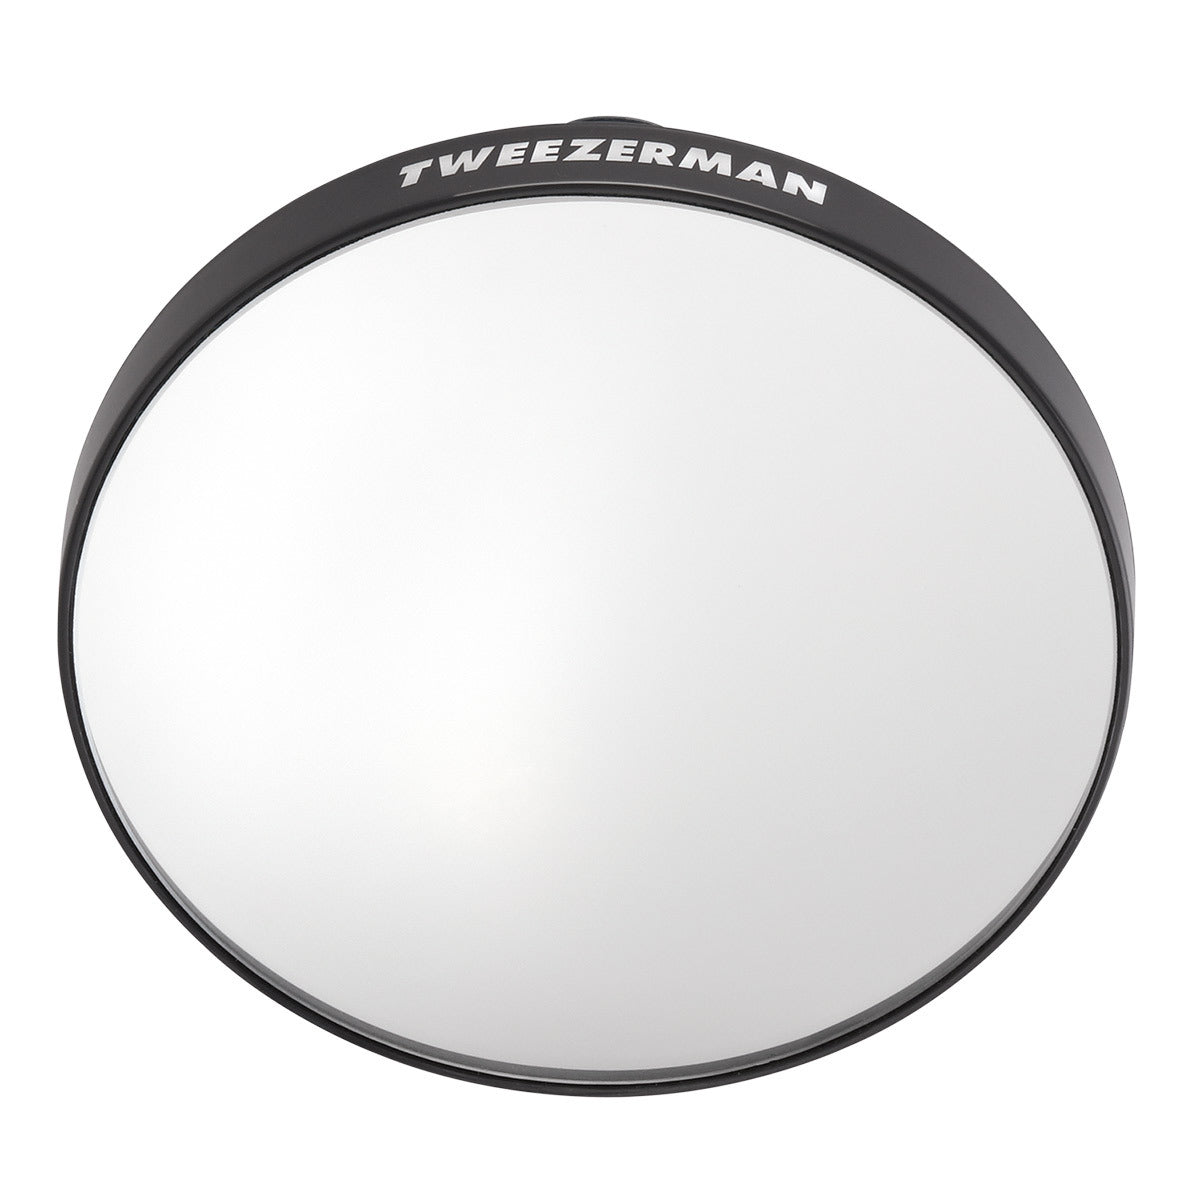 Primary image of Tweezermate 12x Magnifying Mirror